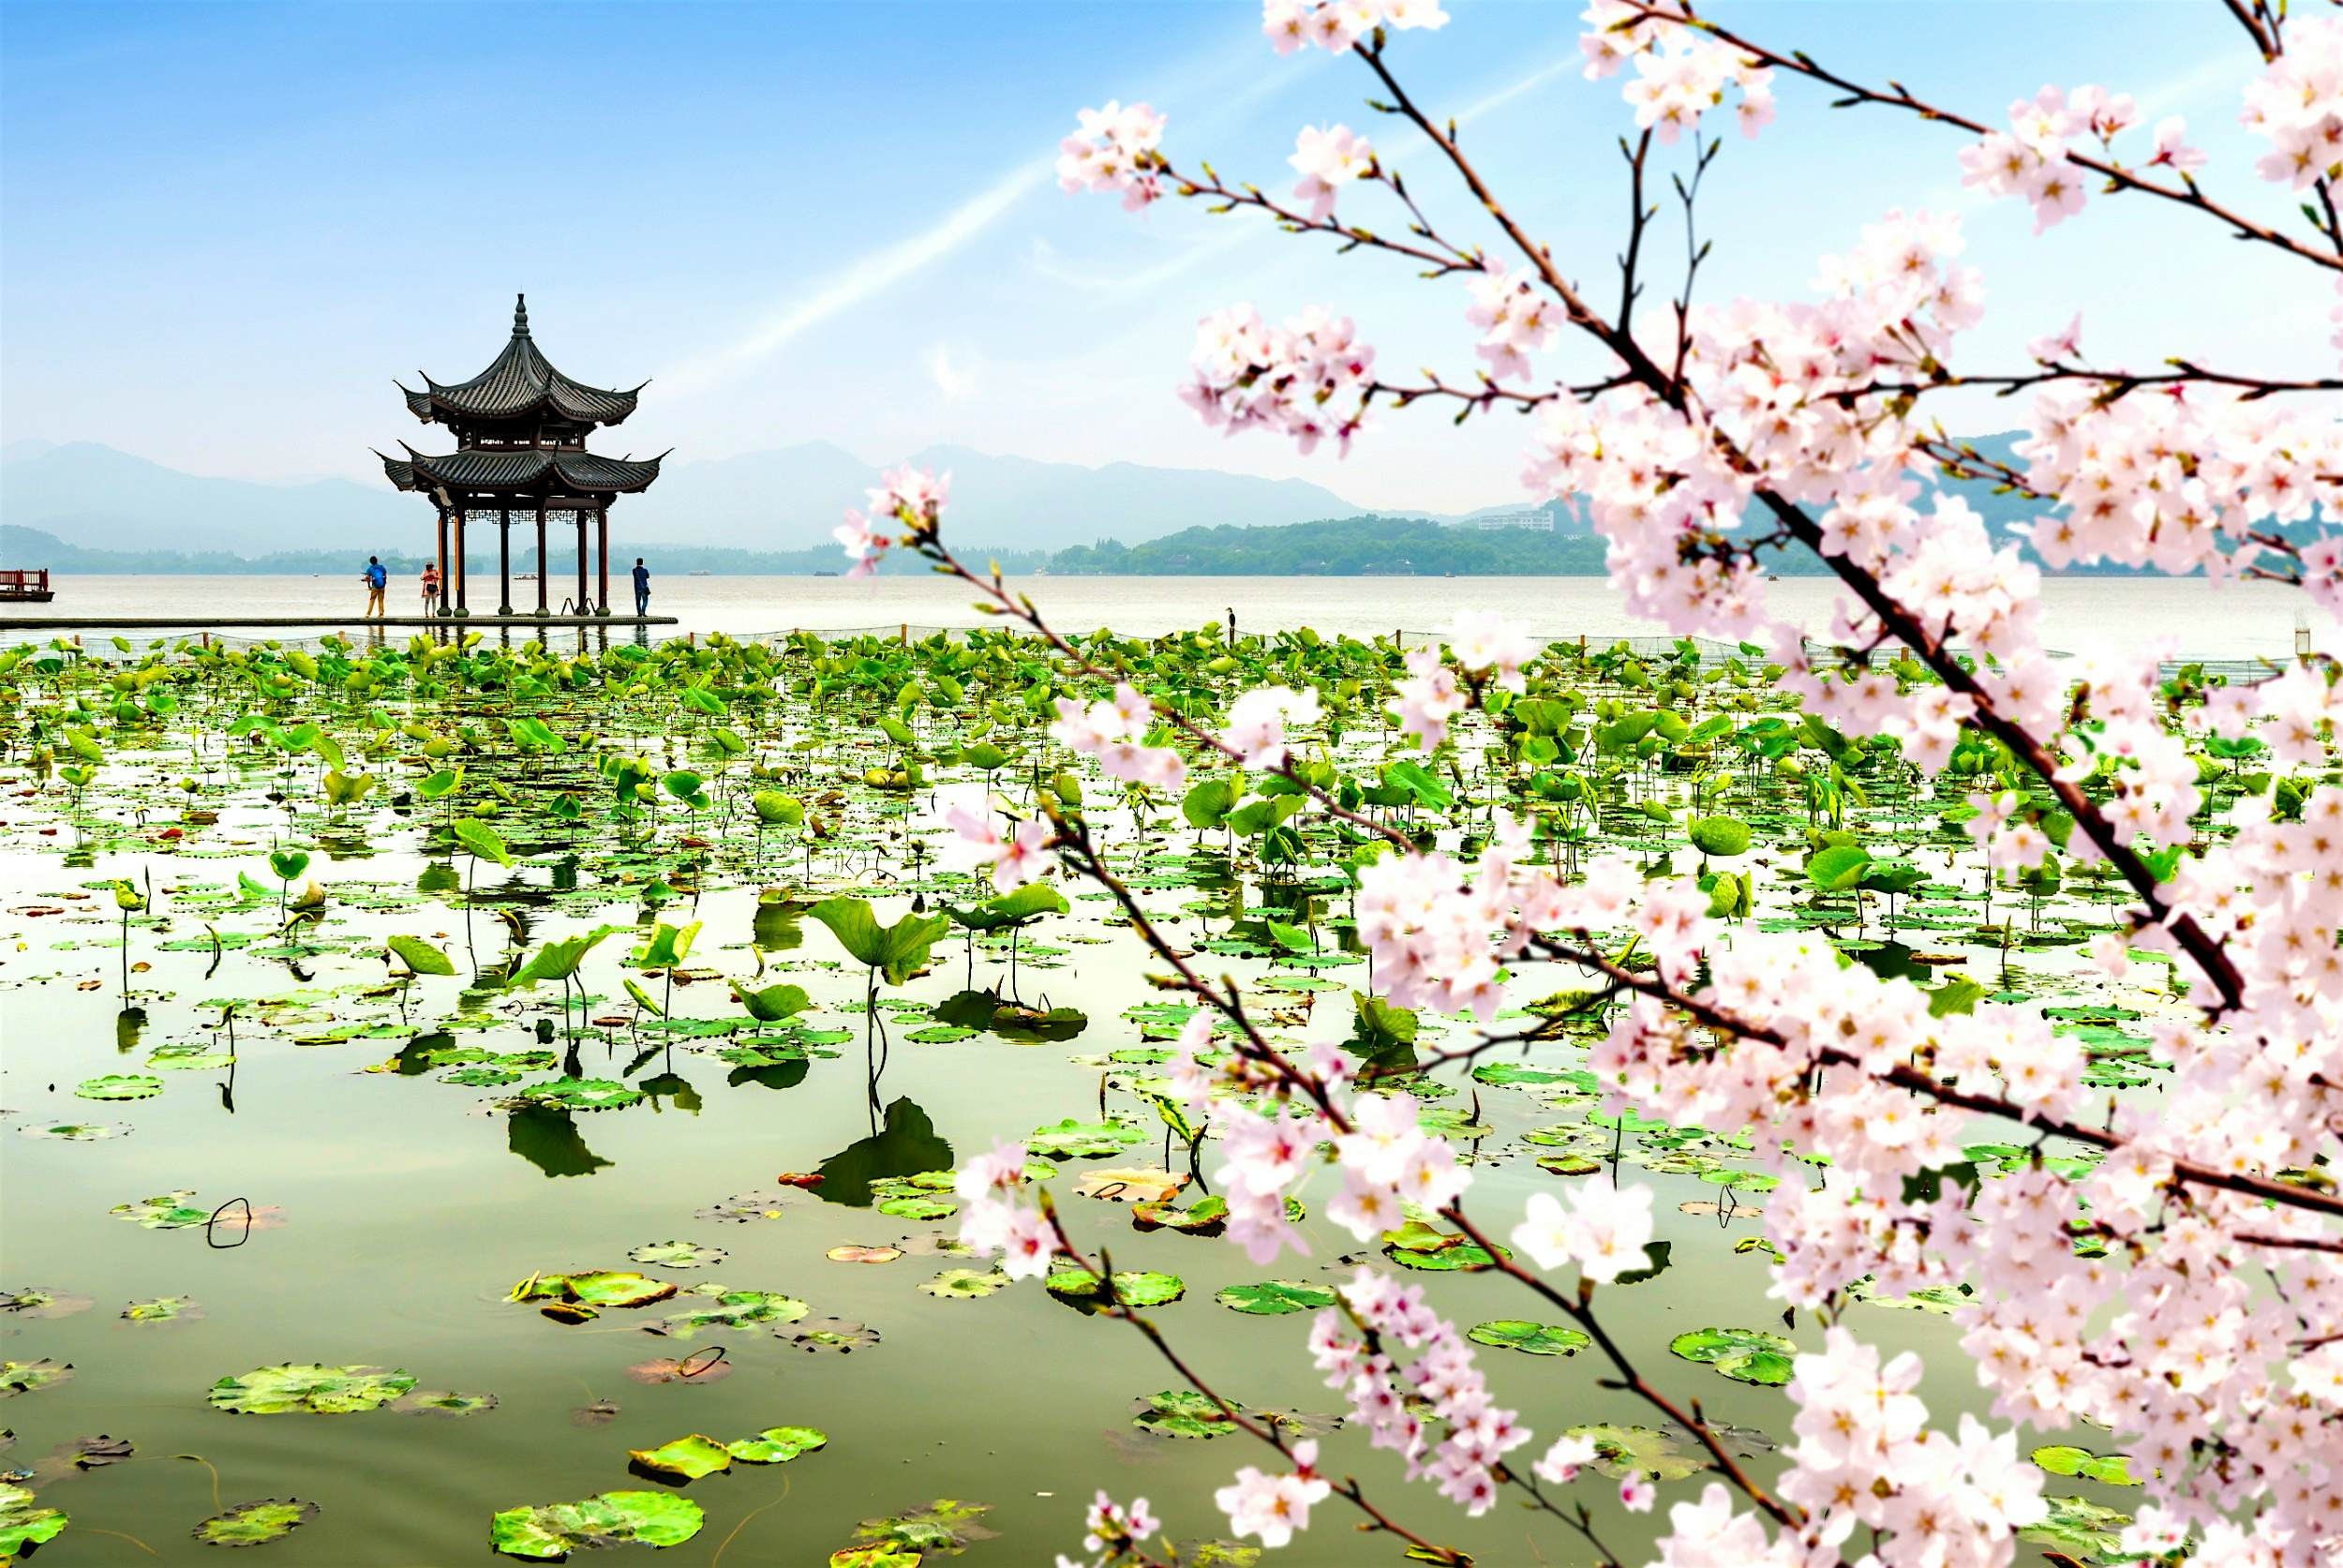 West Lake en China con flores de cerezo